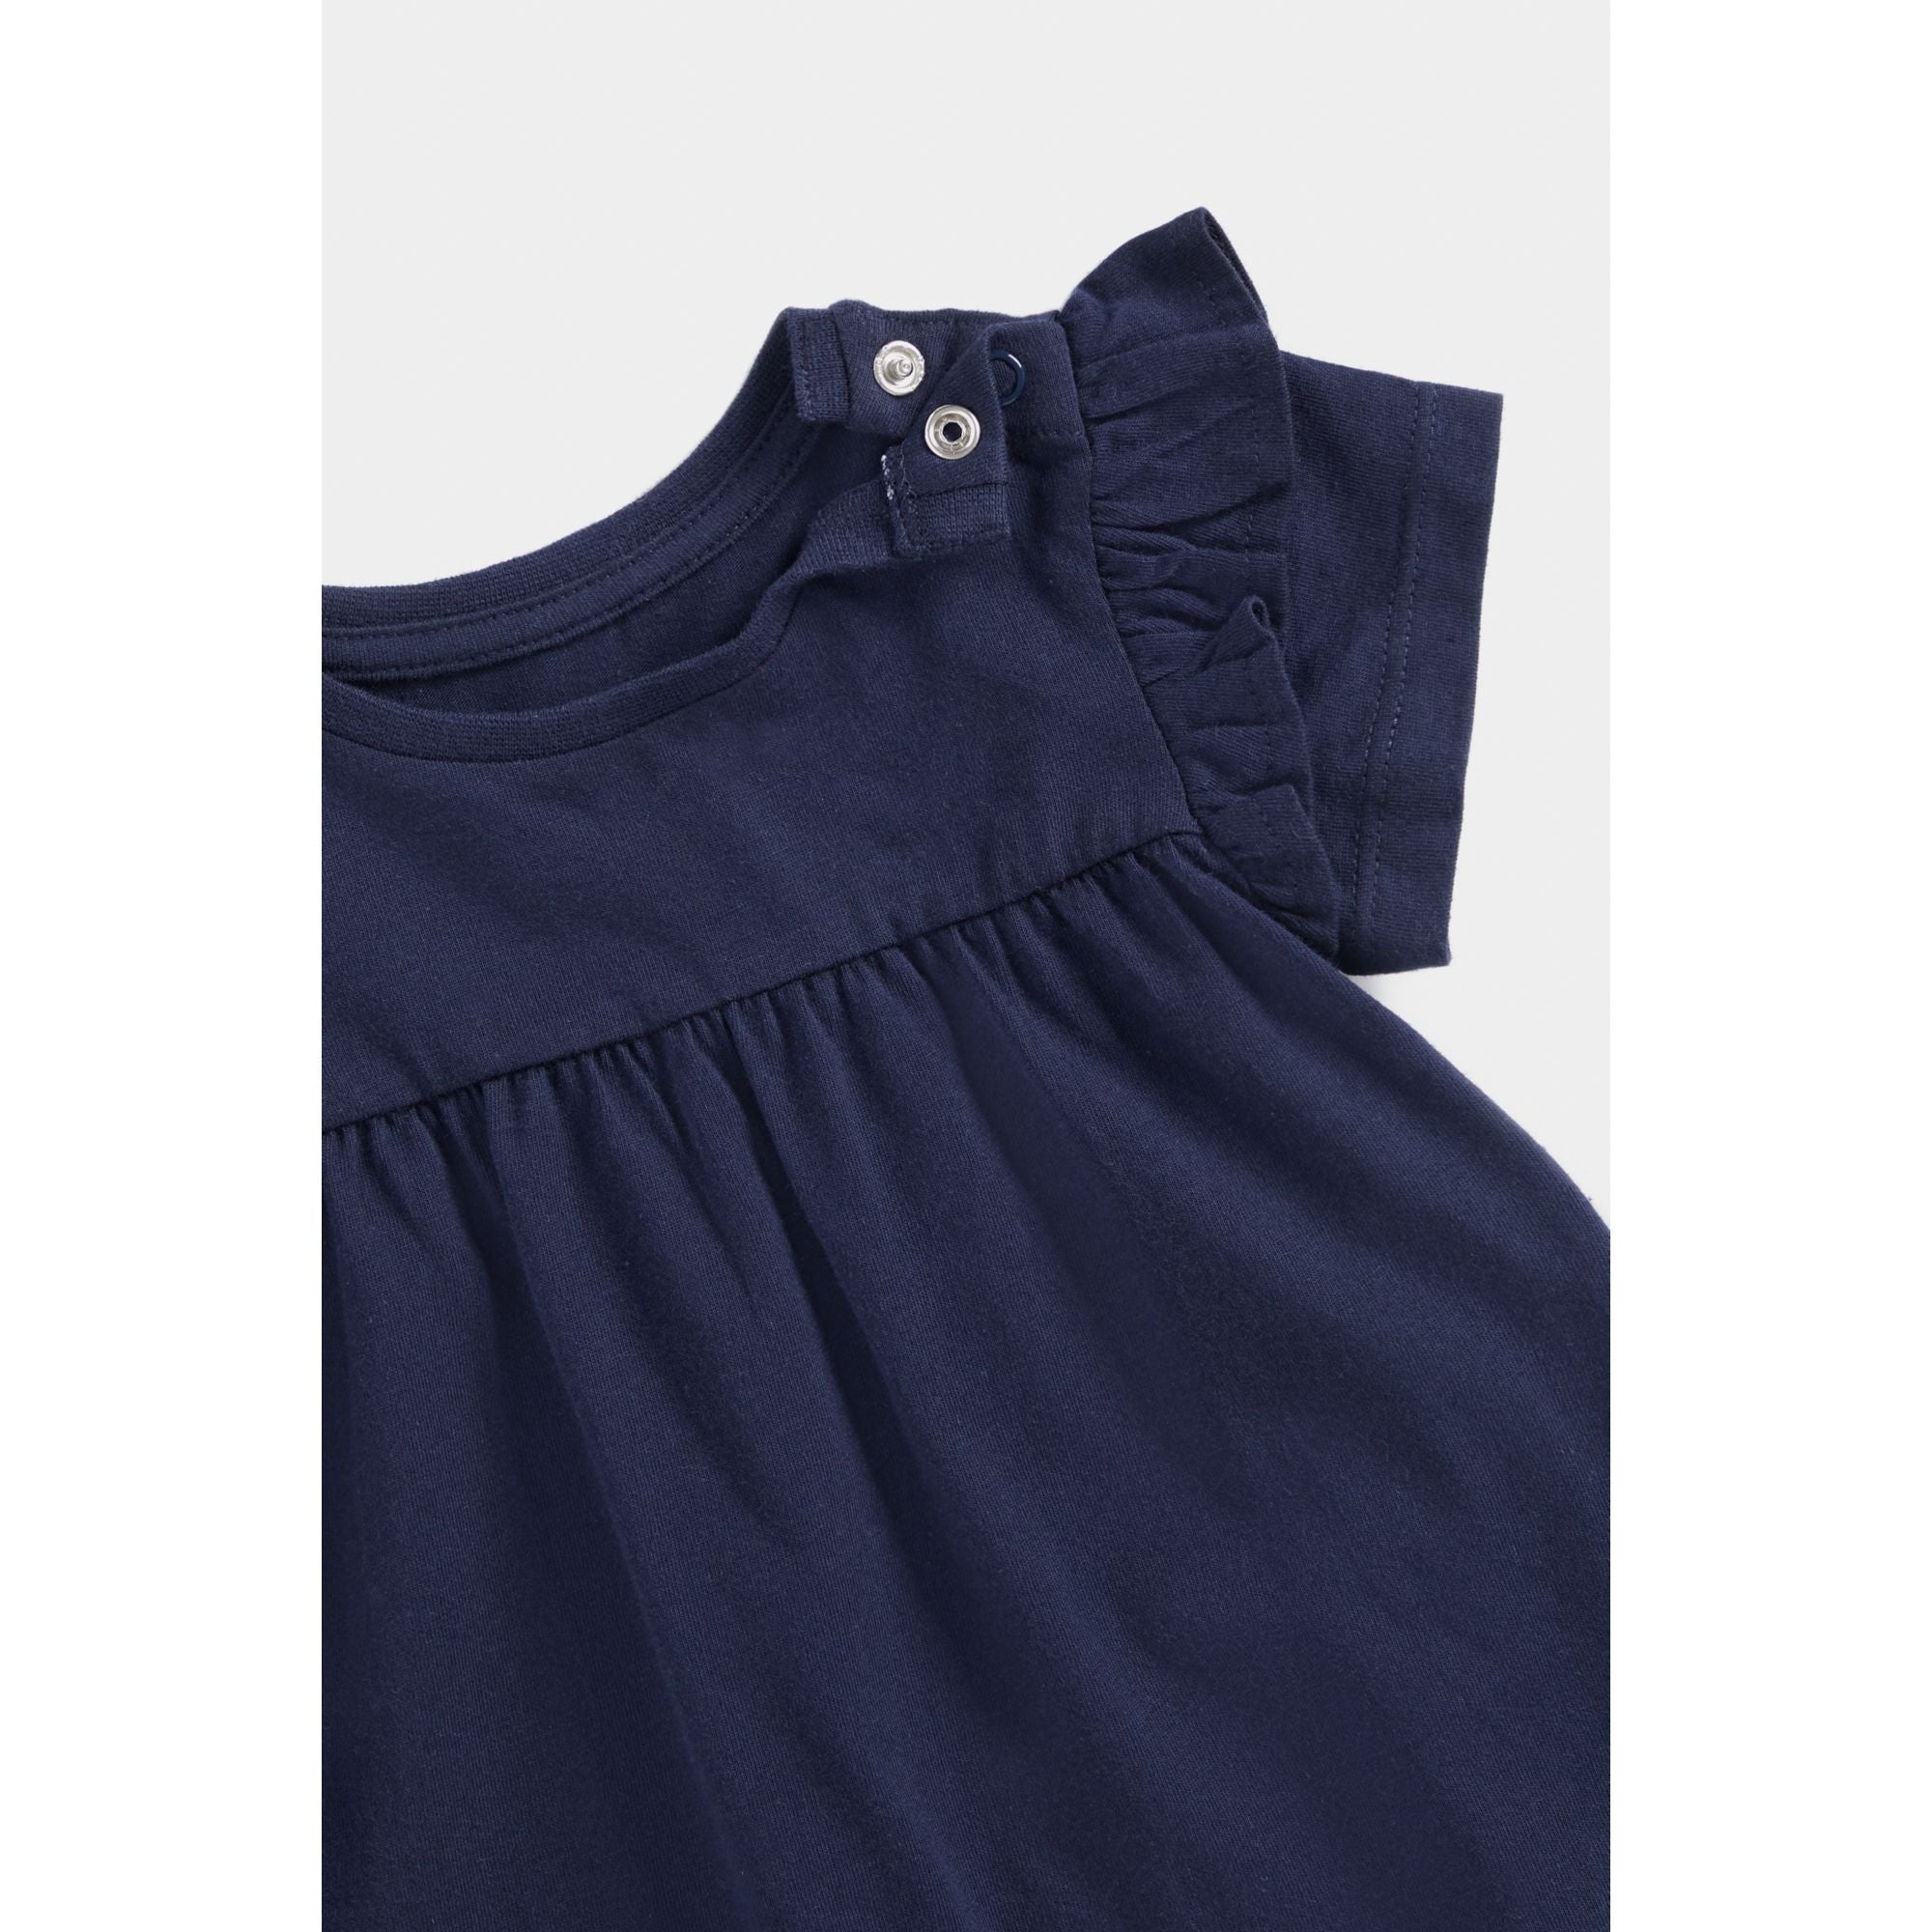 Mothercare Navy Frill-Sleeve T-Shirt